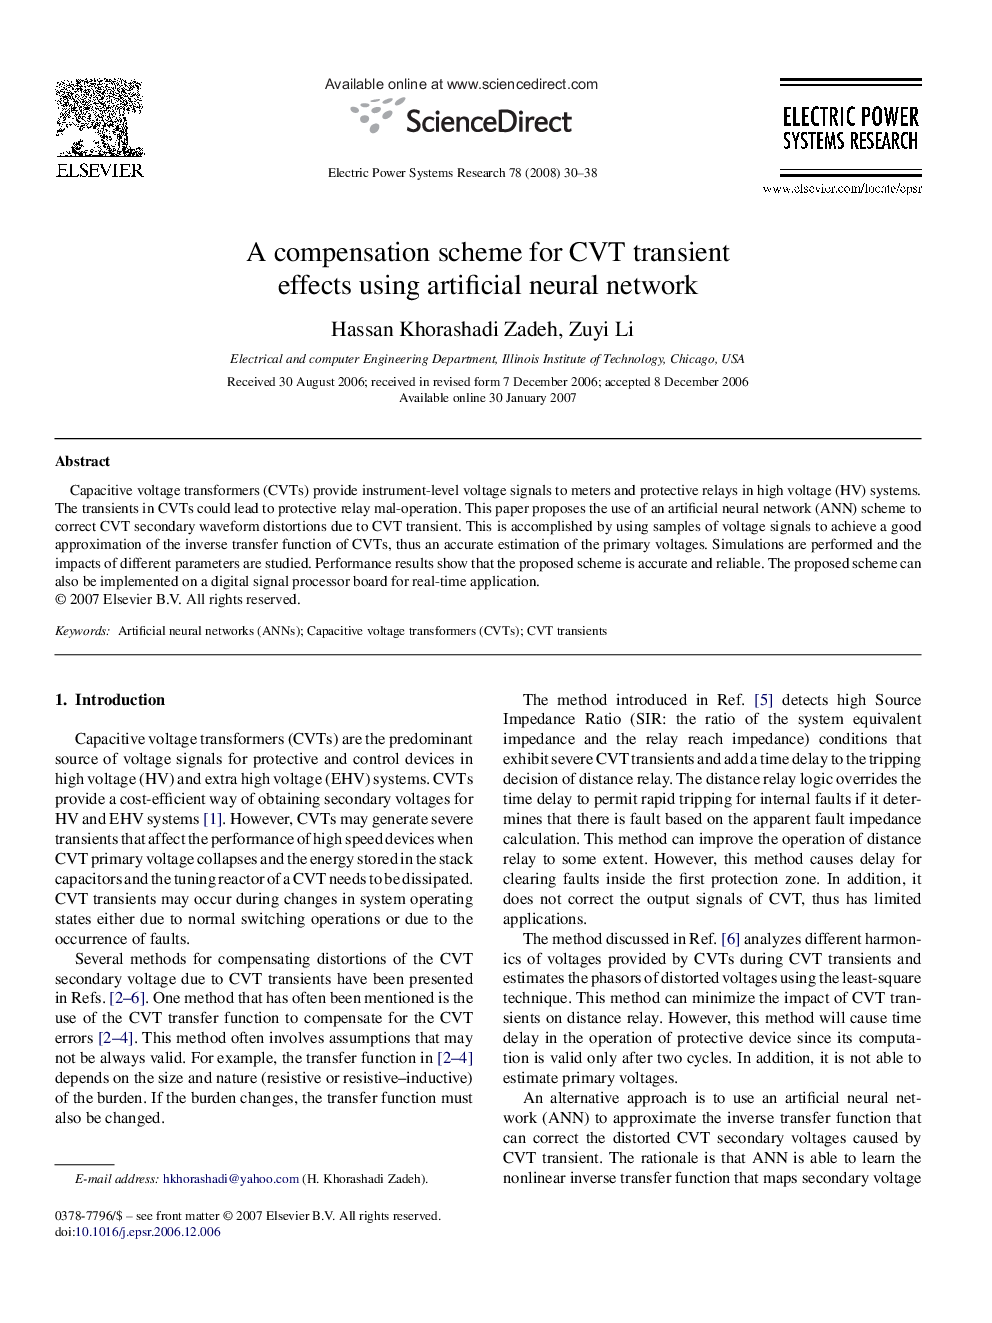 A compensation scheme for CVT transient effects using artificial neural network